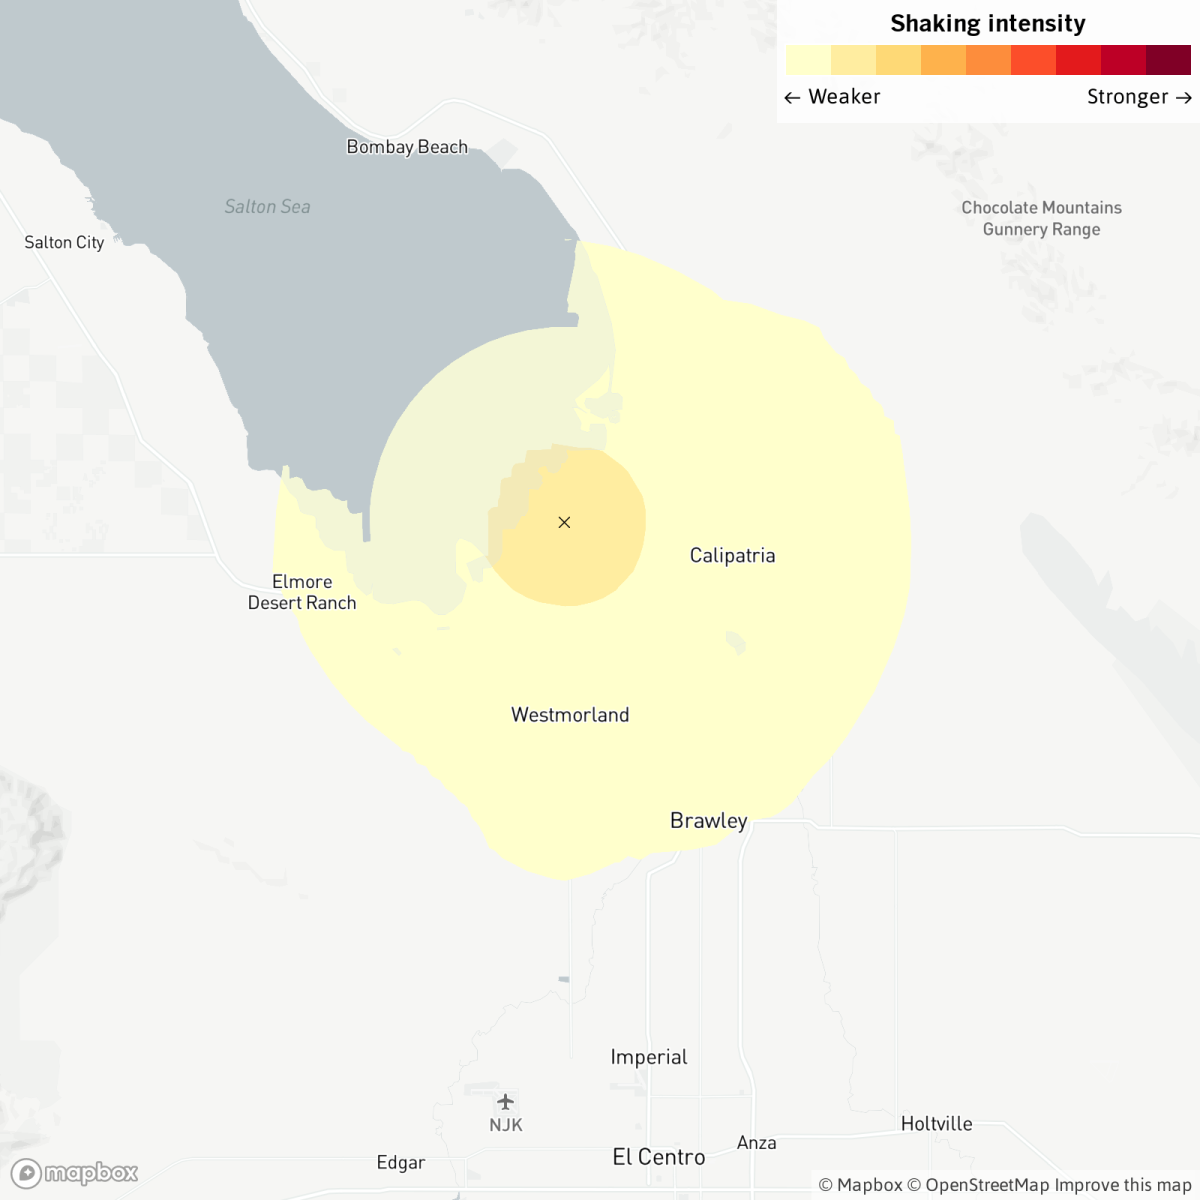 Map of area around the Salton Sea where the 3.6 earthquake struck Sunday